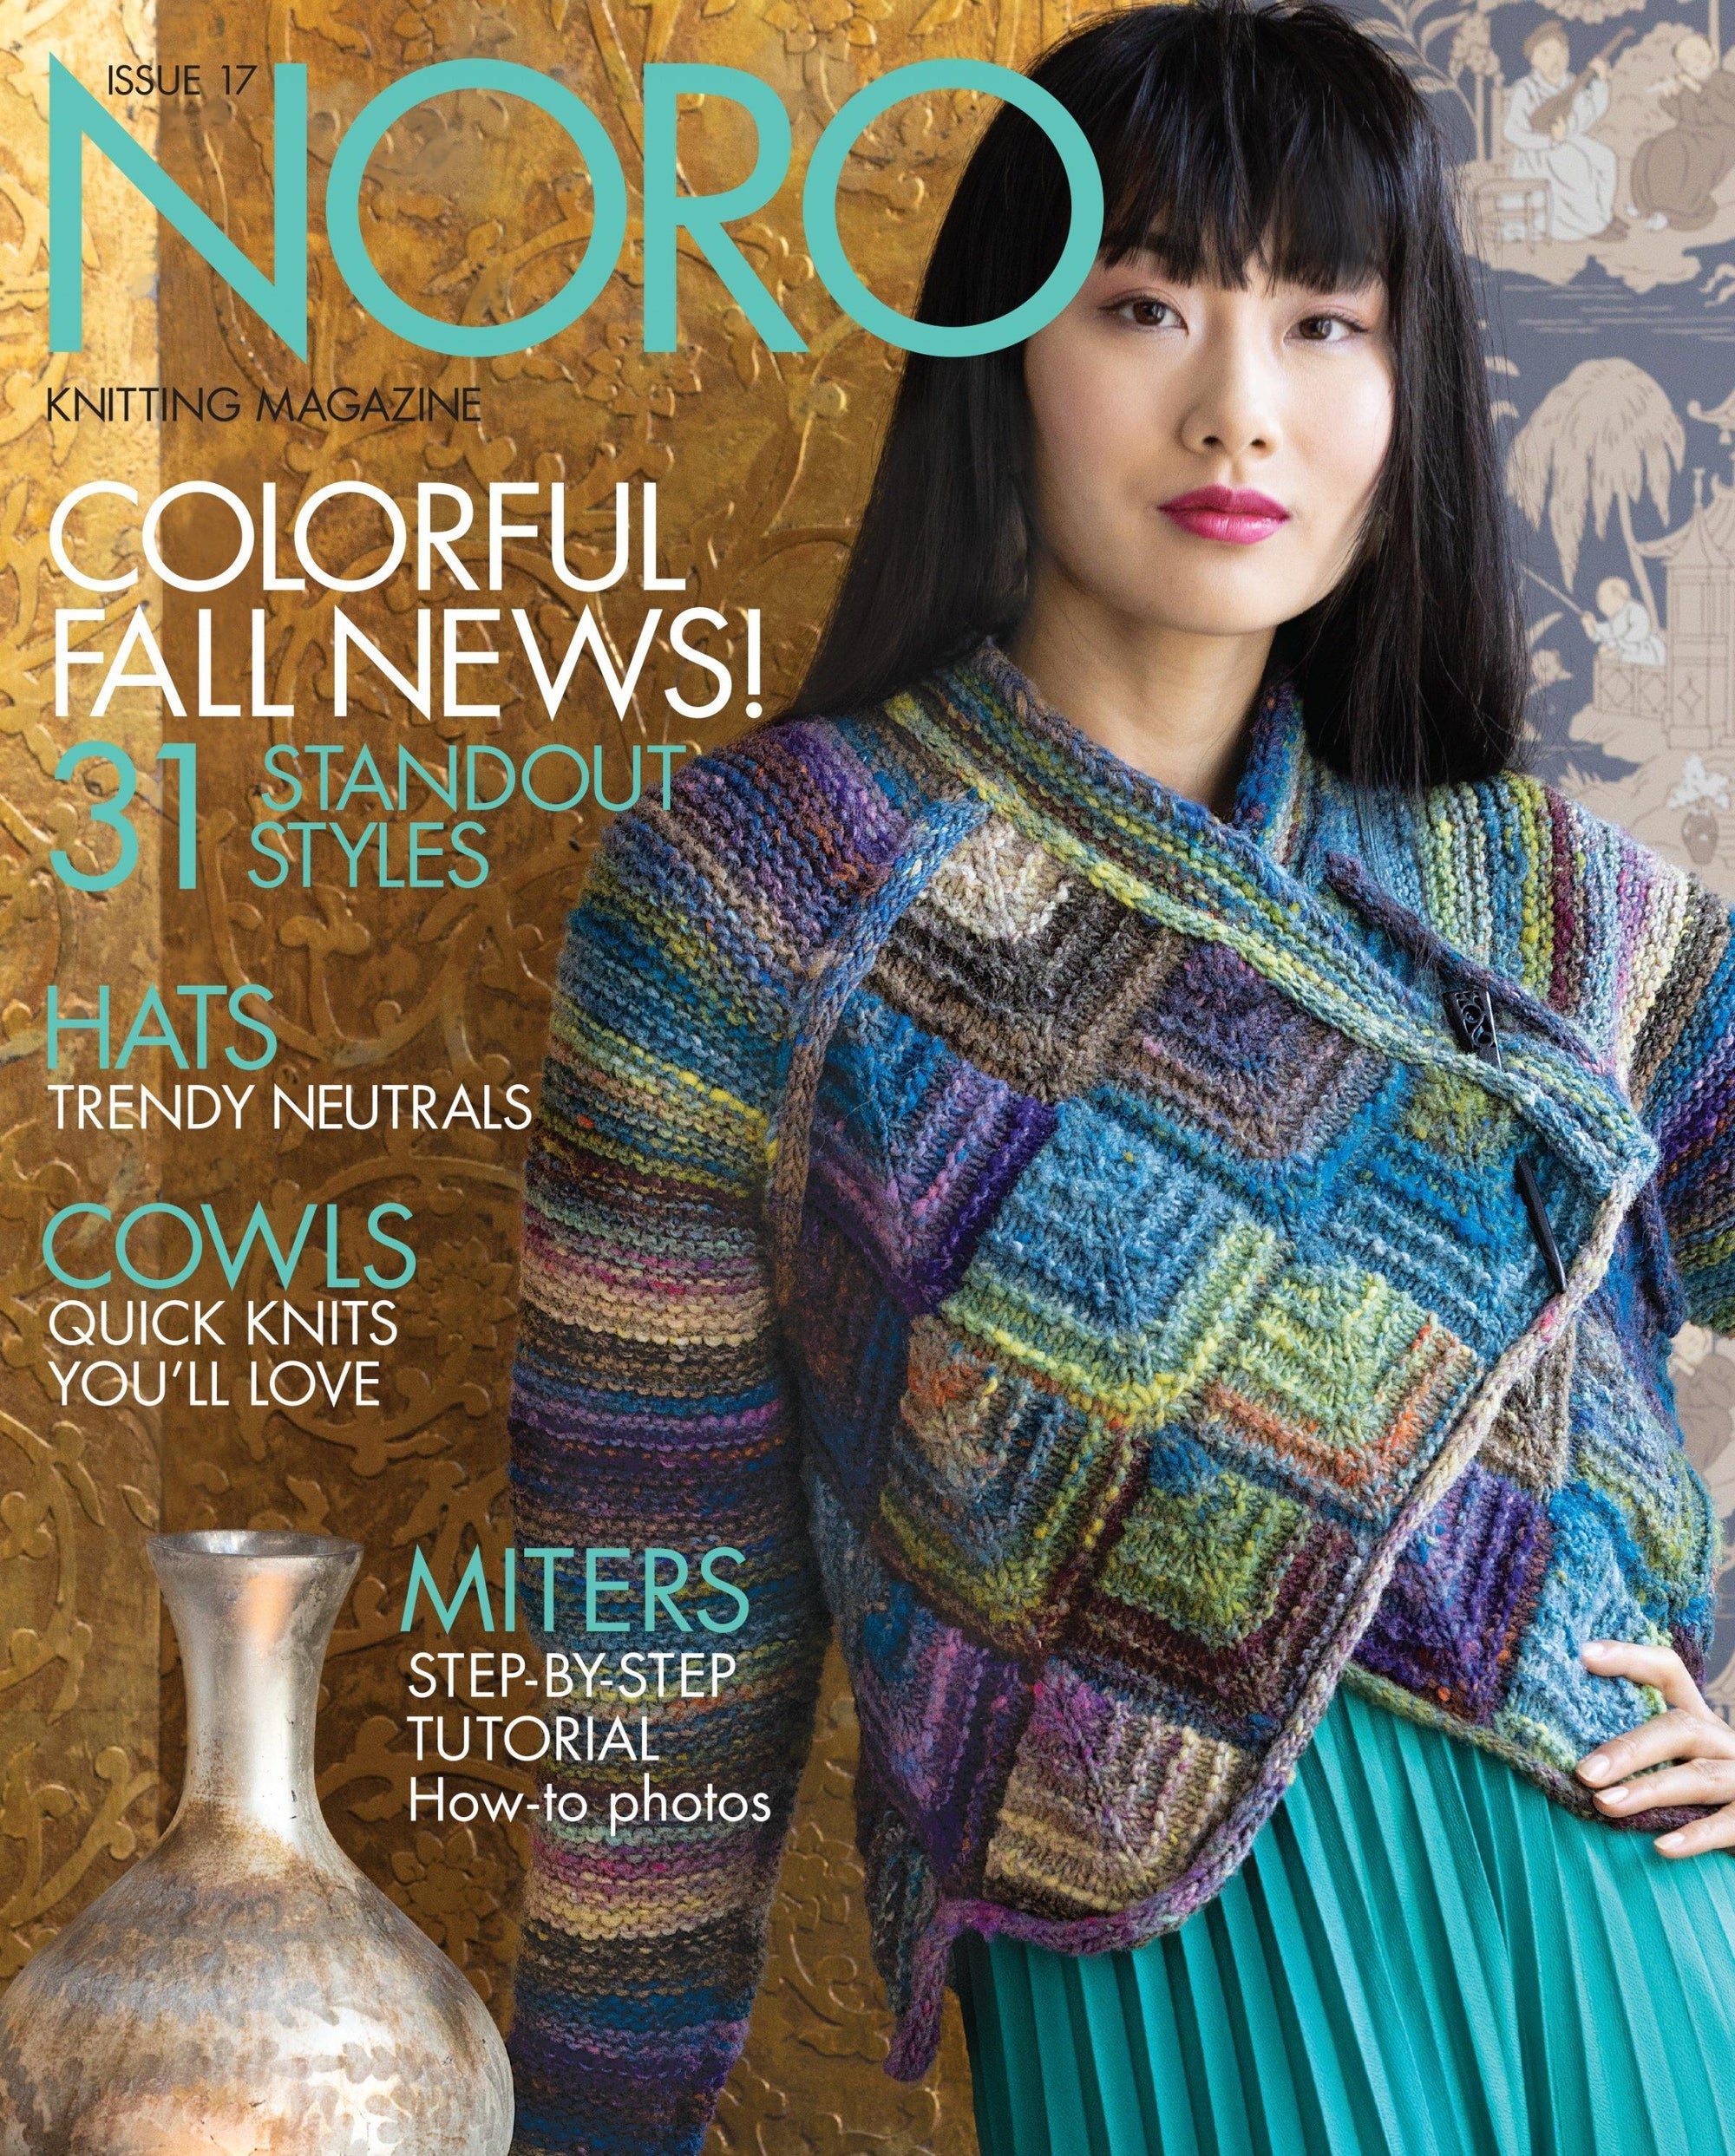 Noro Magazine Issue 17 Noro